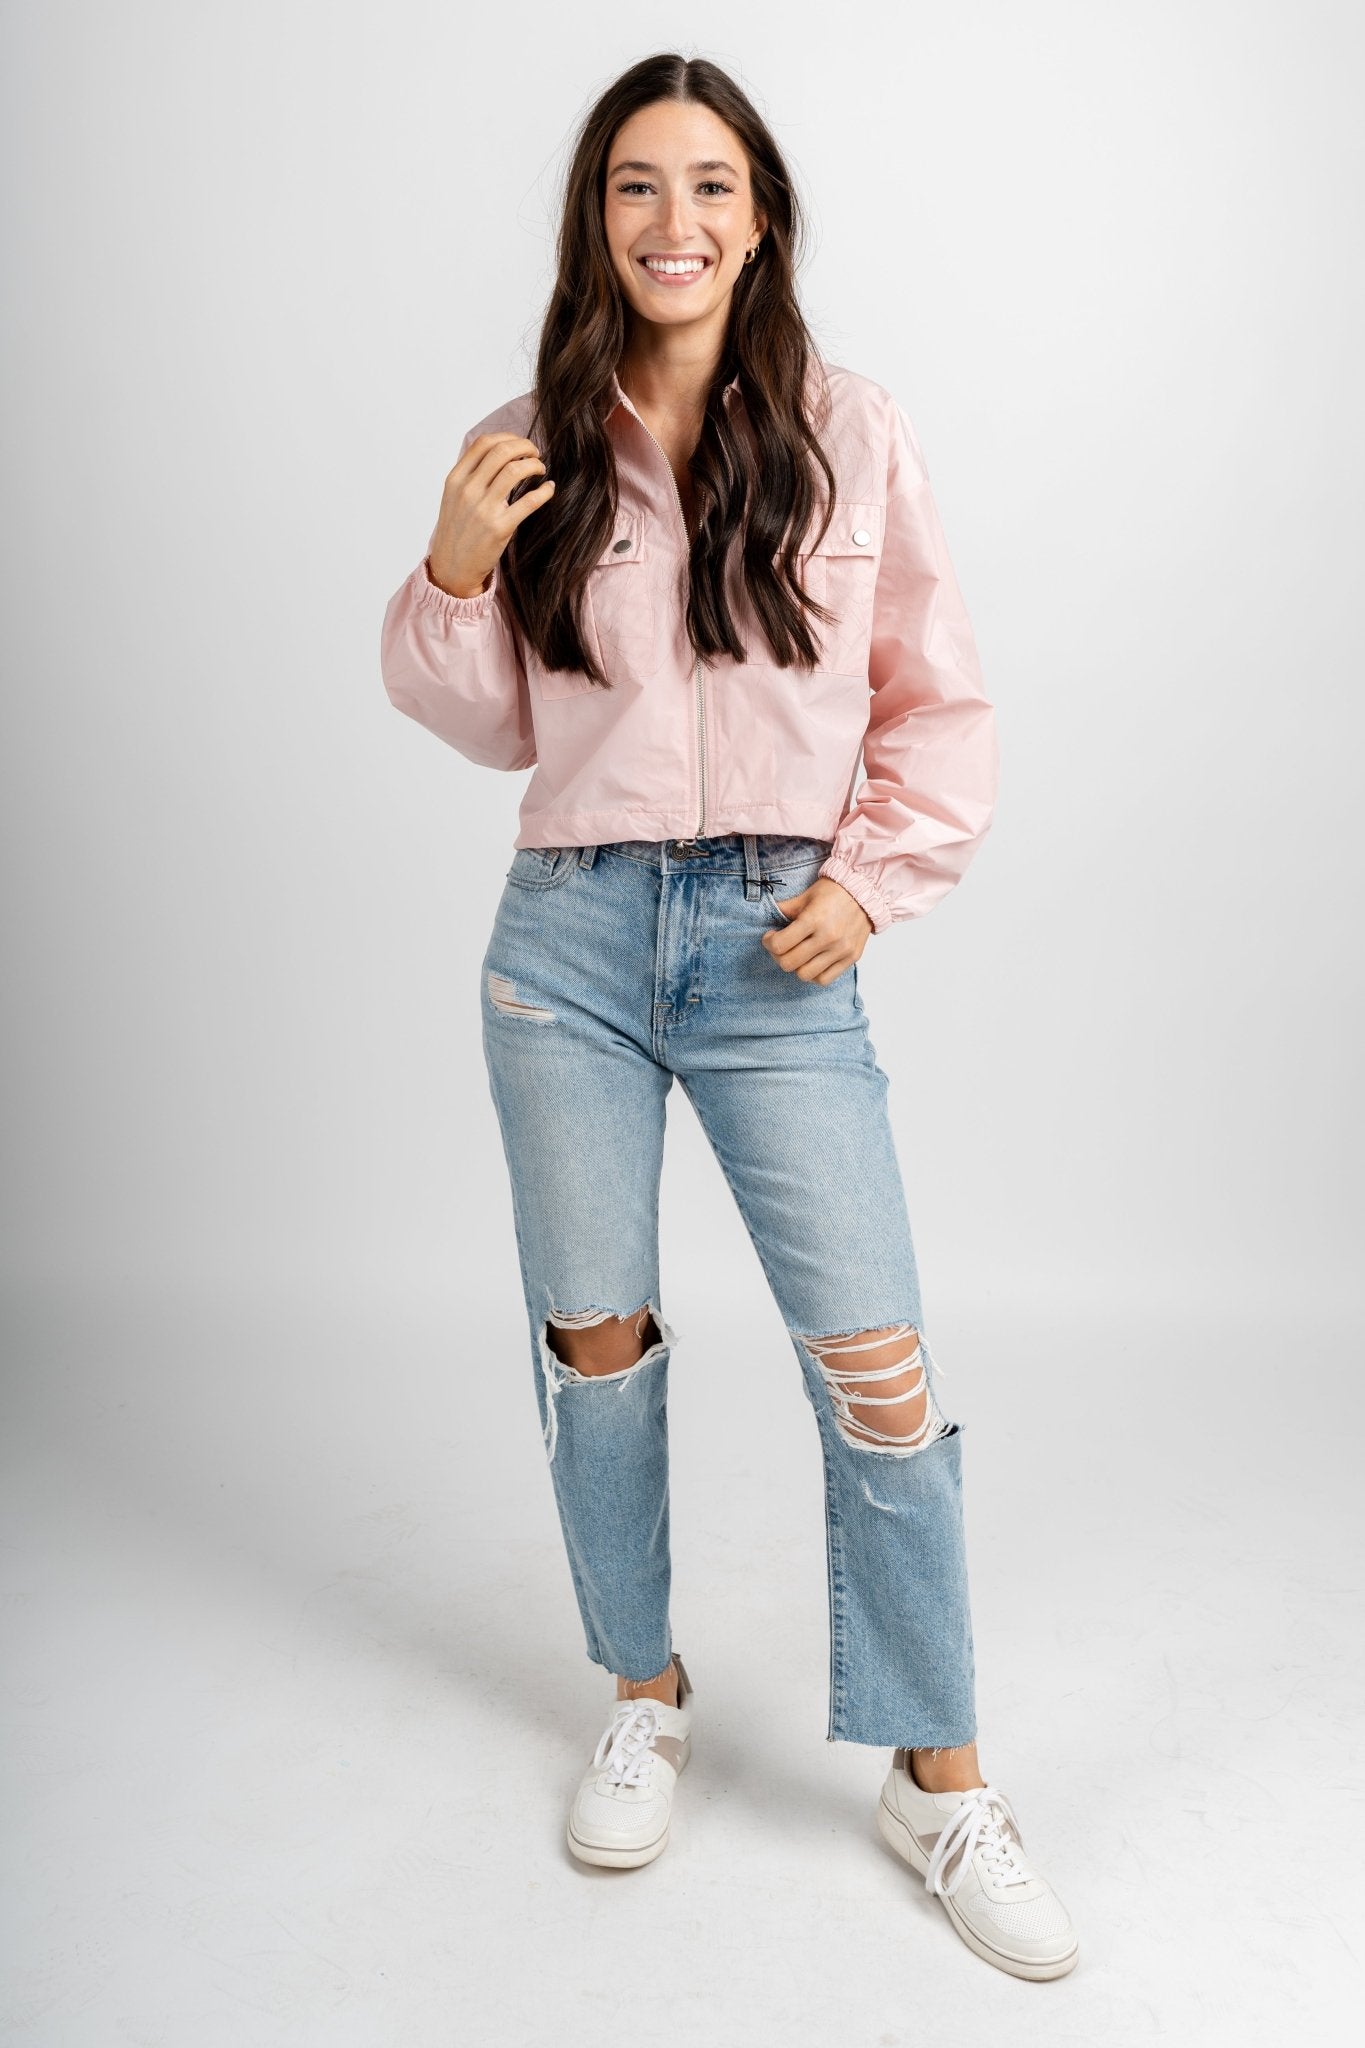 Windbreaker zip jacket baby pink – Fashionable Jackets | Trendy Blazers at Lush Fashion Lounge Boutique in Oklahoma City